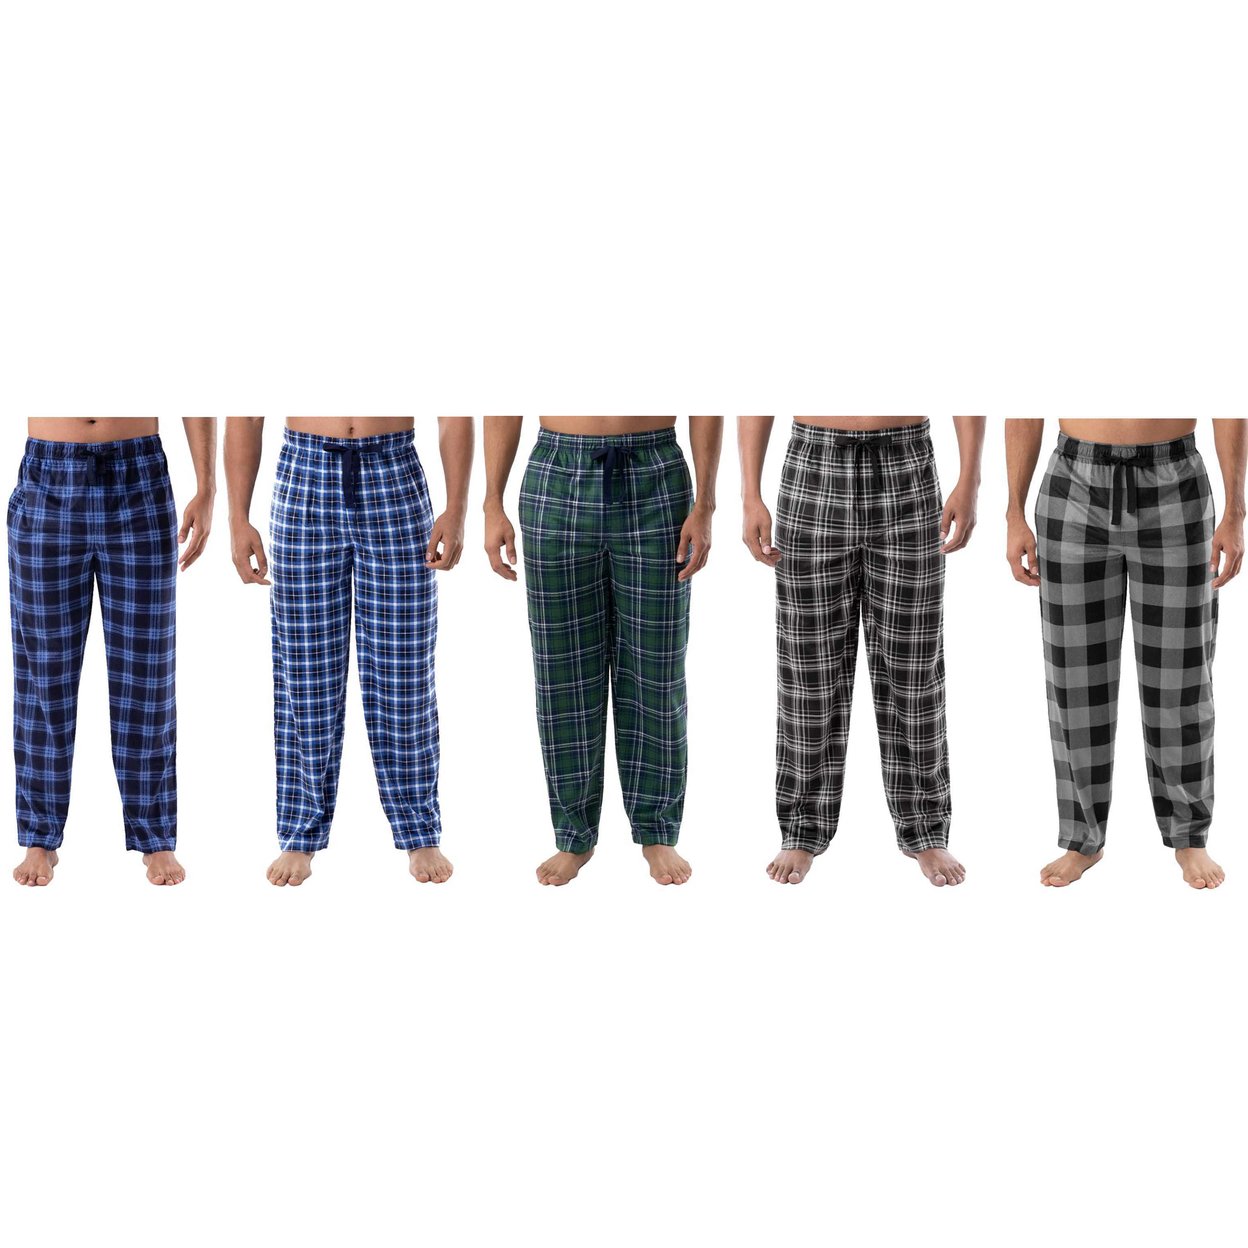 Bargain Hunters 5-Pack: Mens Ultra-Soft Cozy Lounge Sleep Micro Fleece Plaid Pajama Pants